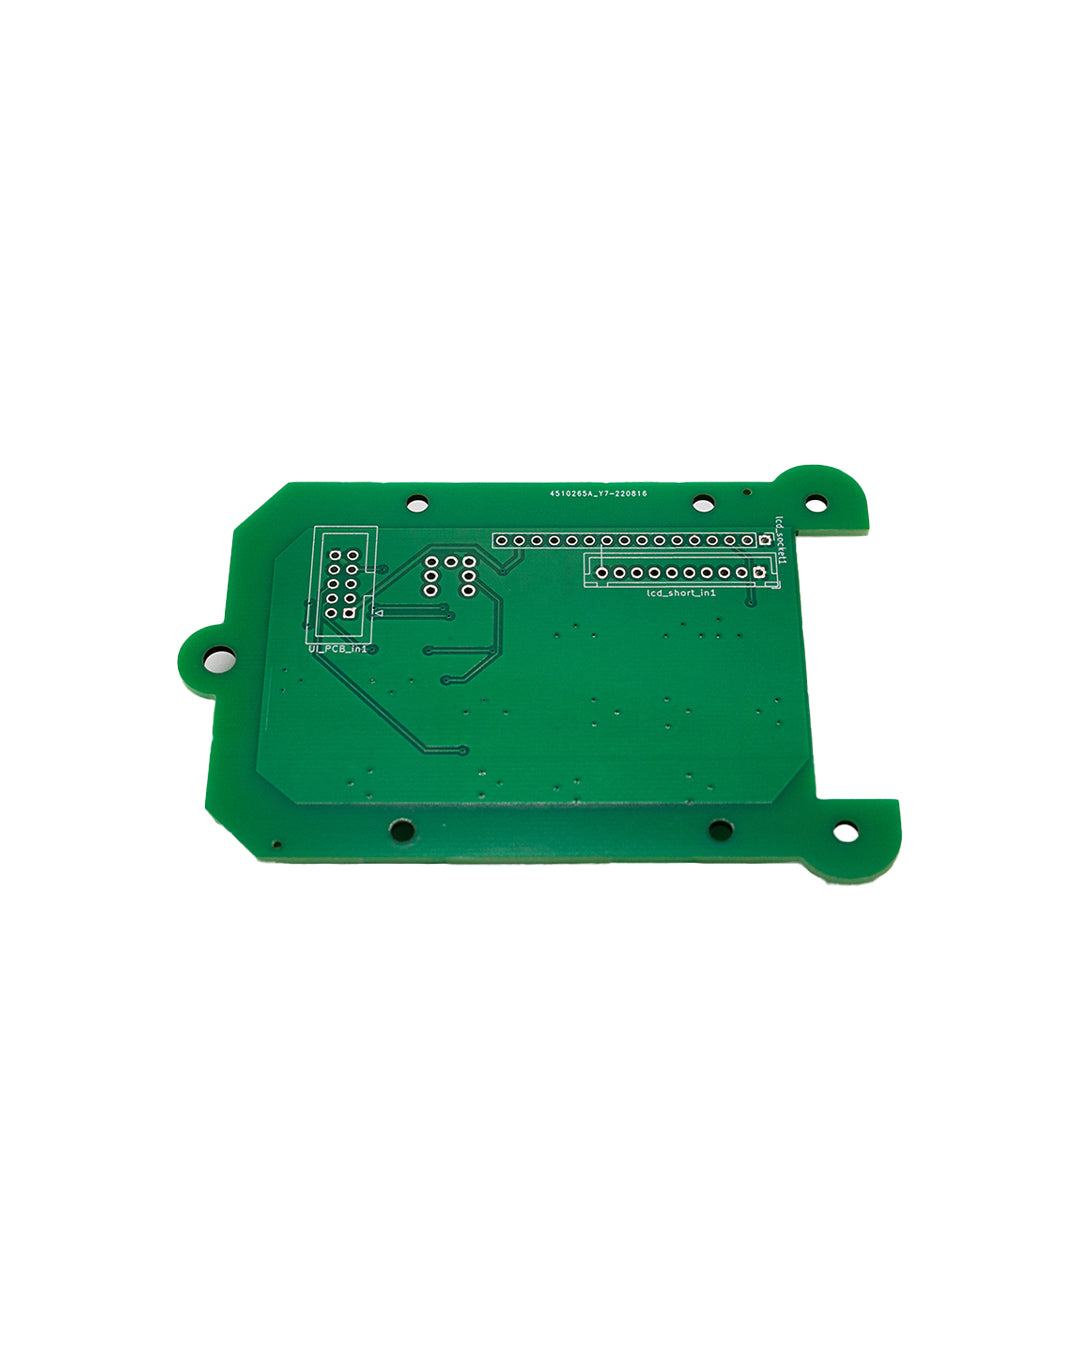 CP800 parts - Dpad PCB - CPD03 *Pre-Order